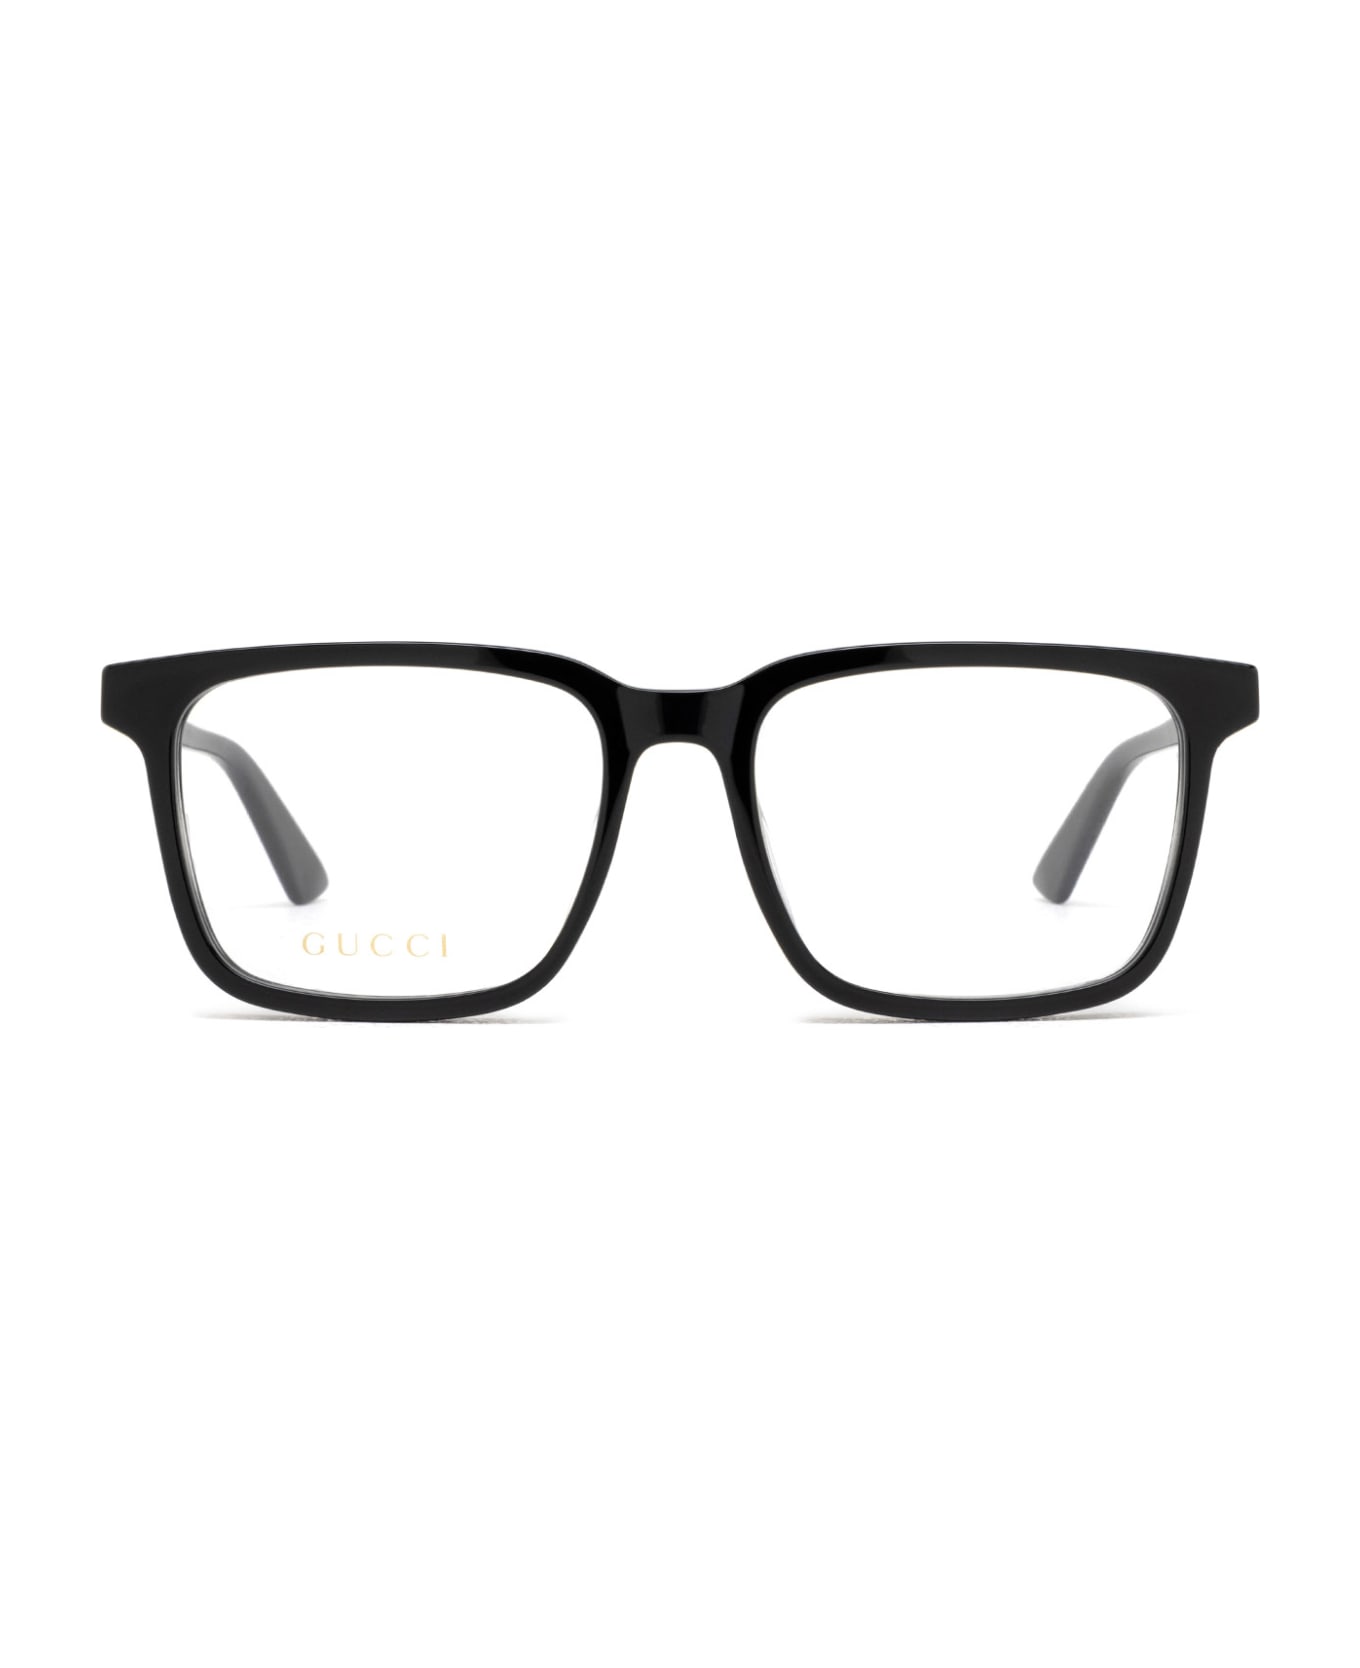 Gucci Eyewear Gg1120oa Black Glasses - Black